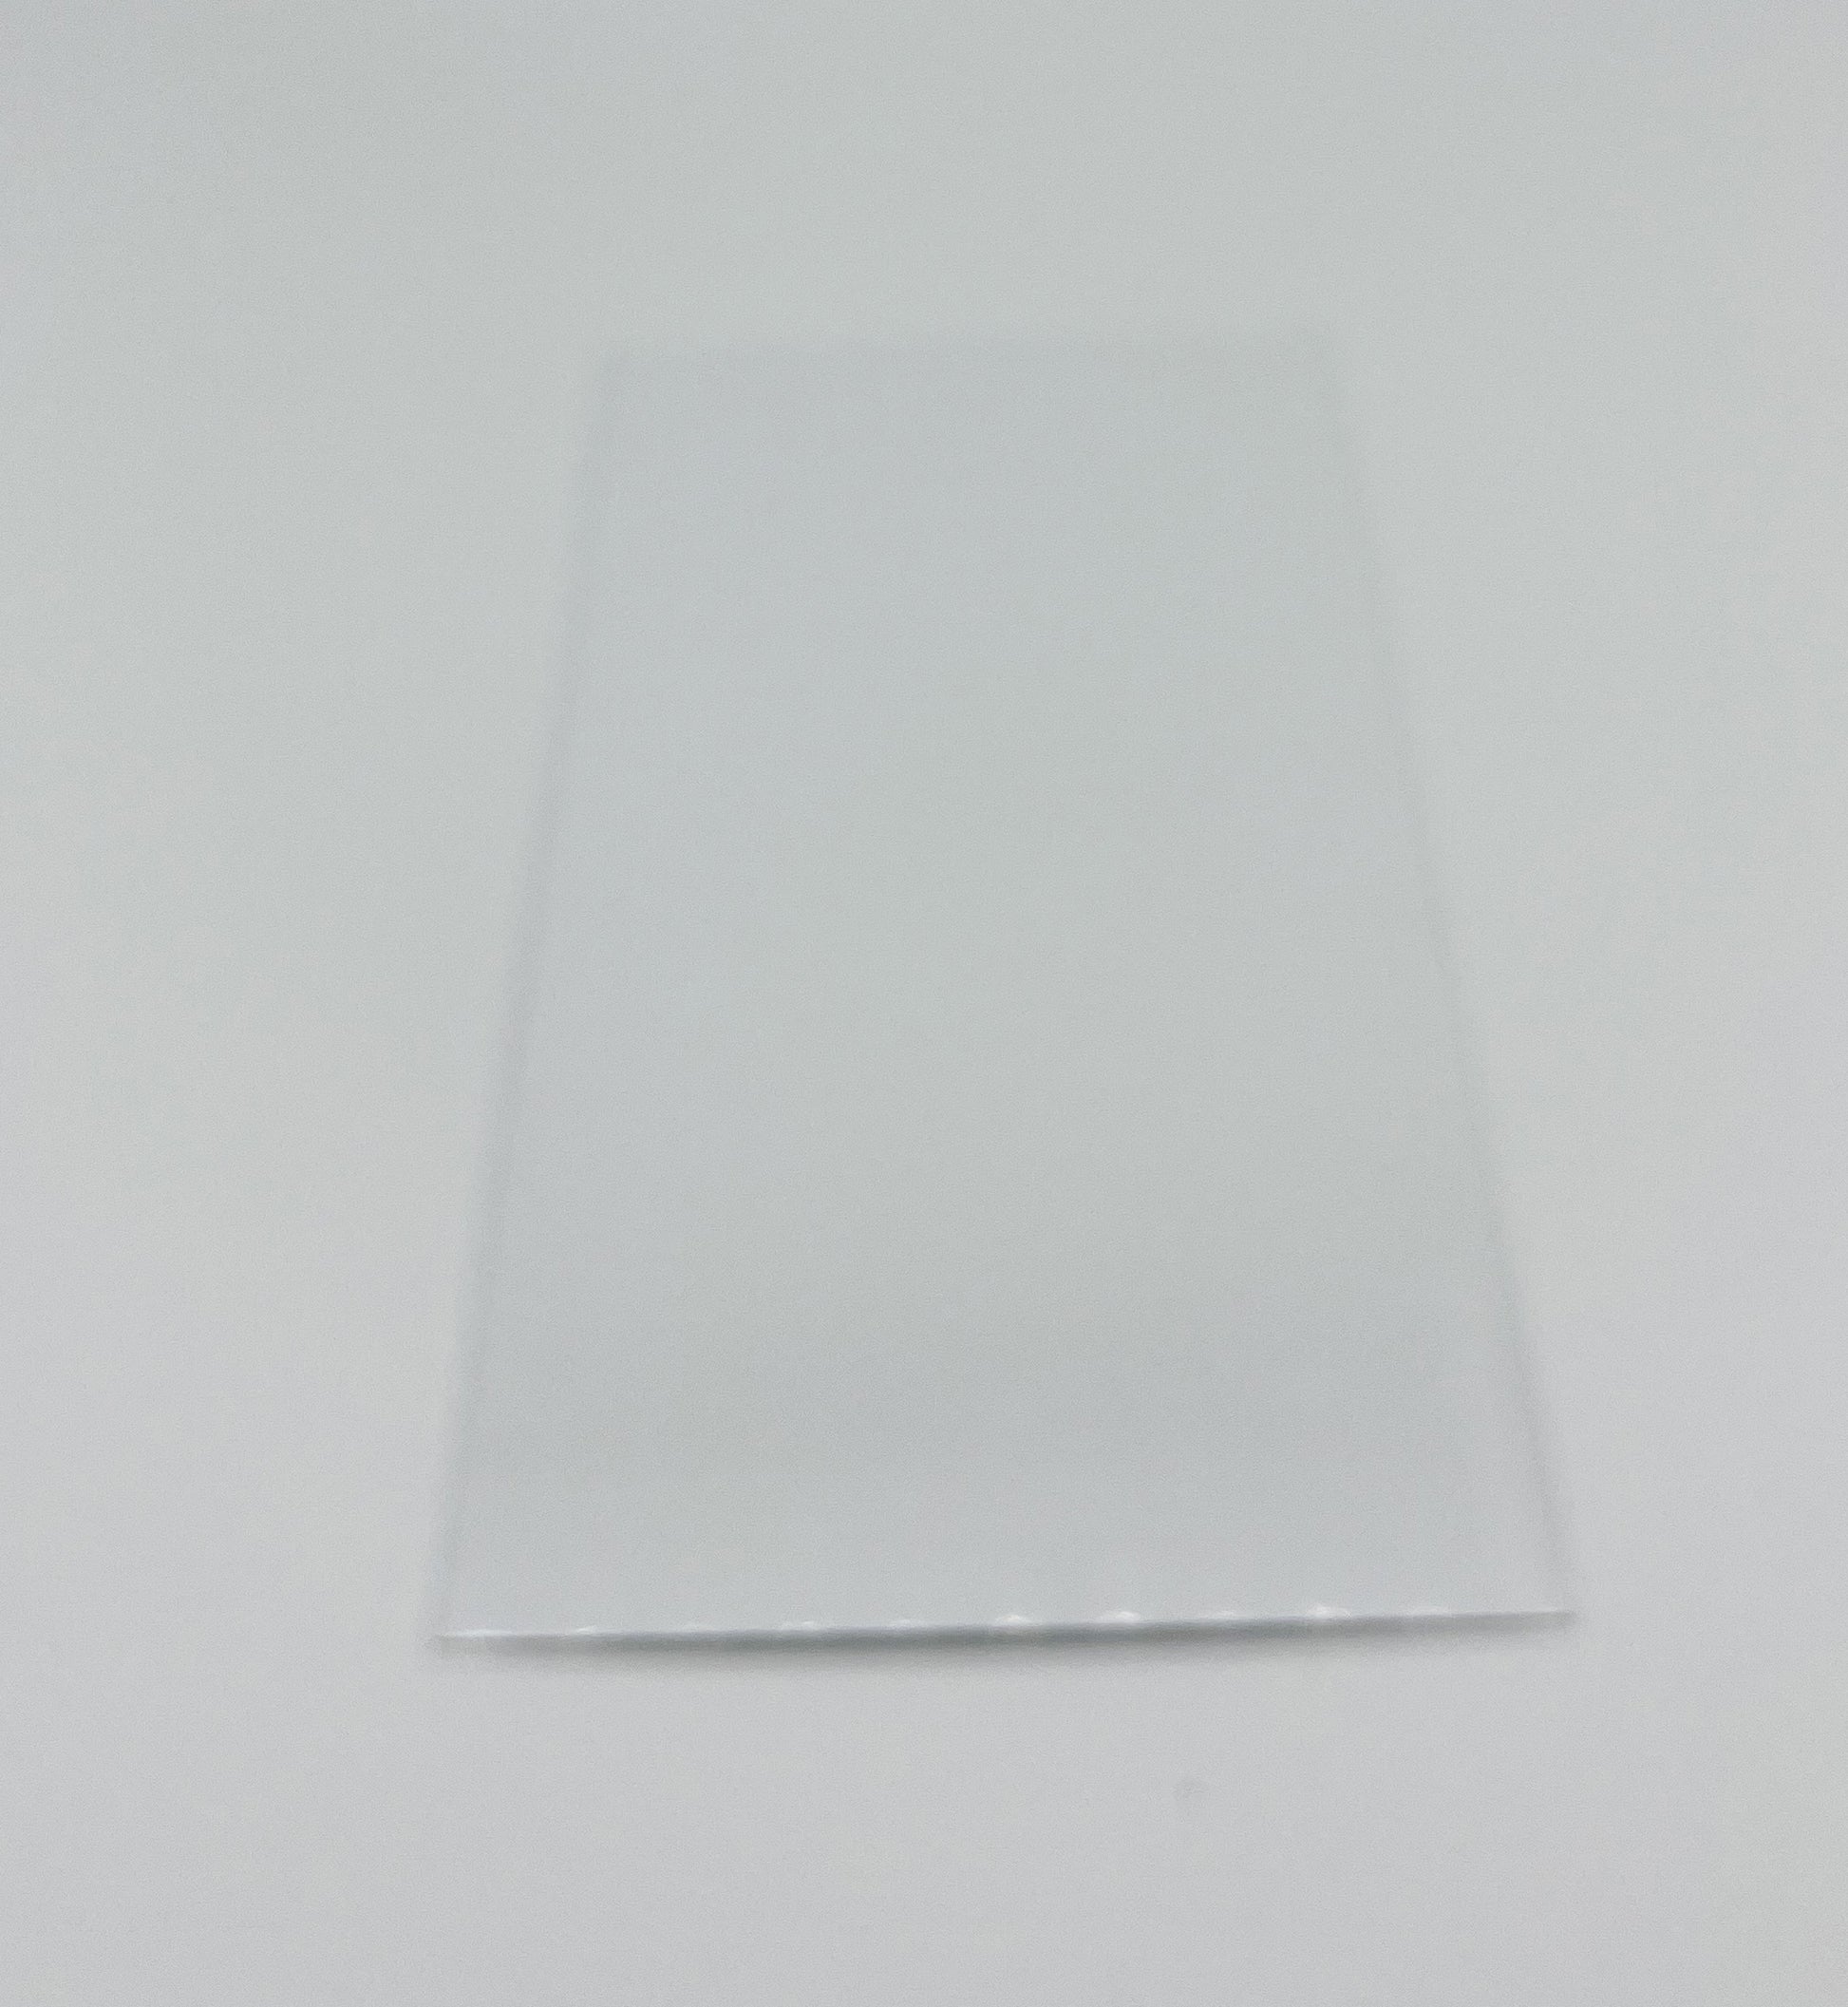 Aluminiumplatte 21 x 10,1 cm, Silber oder Weiß - Sublishop.net GmbH